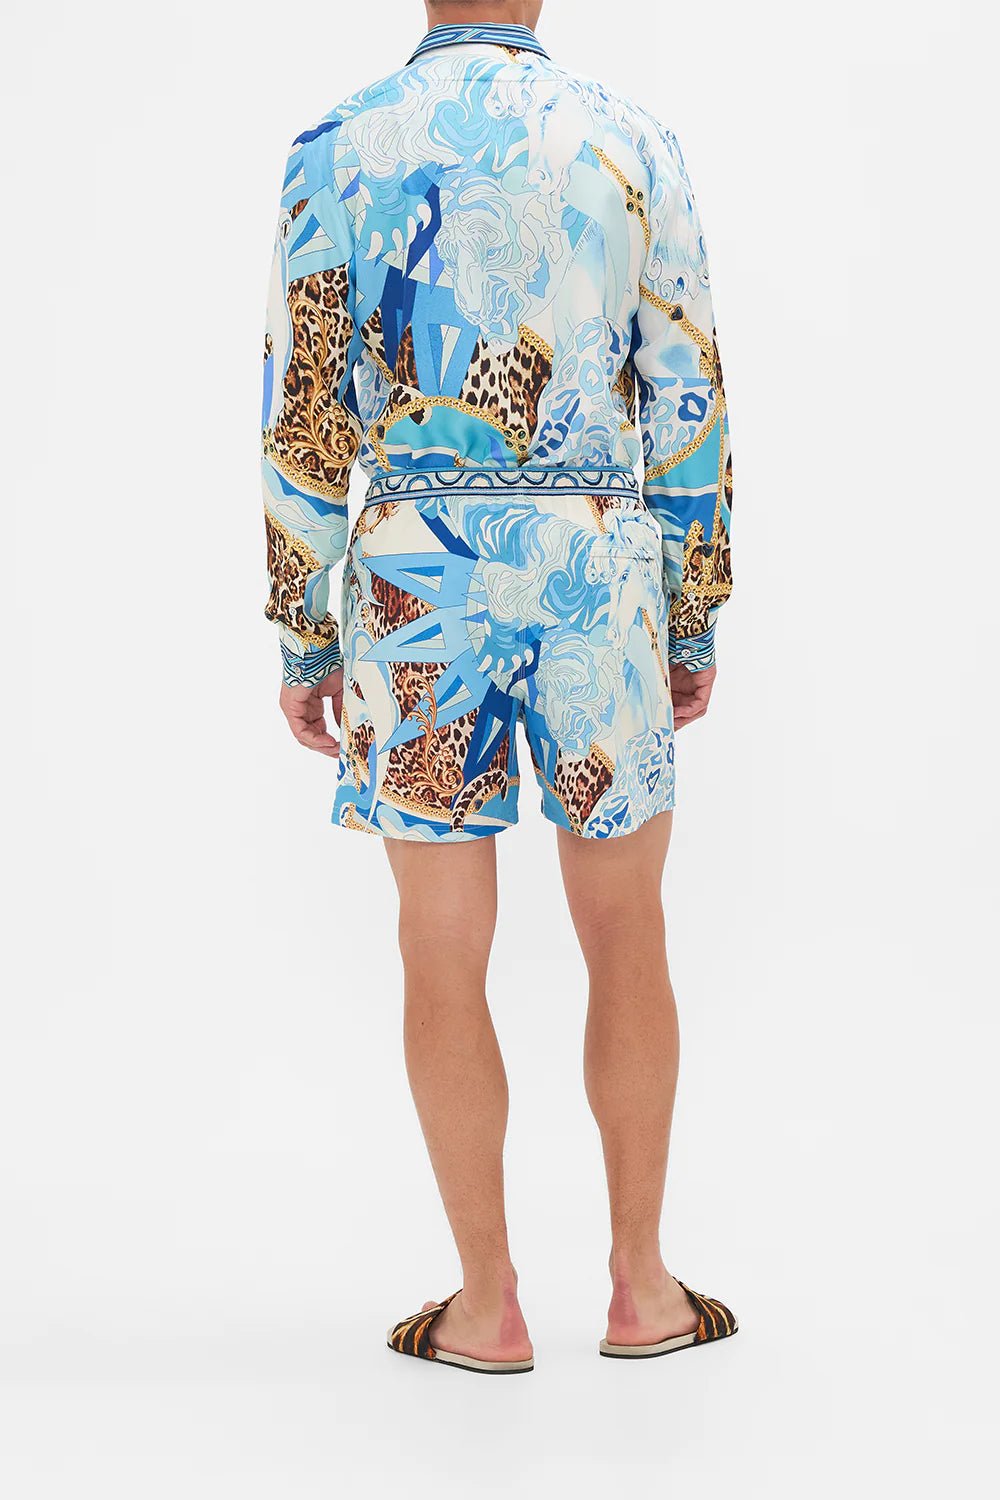 Camilla Mid Length Boardshort Sky Cheetah - Pinkhill, Darwin boutique, Australian high end fashion, Darwin Fashion